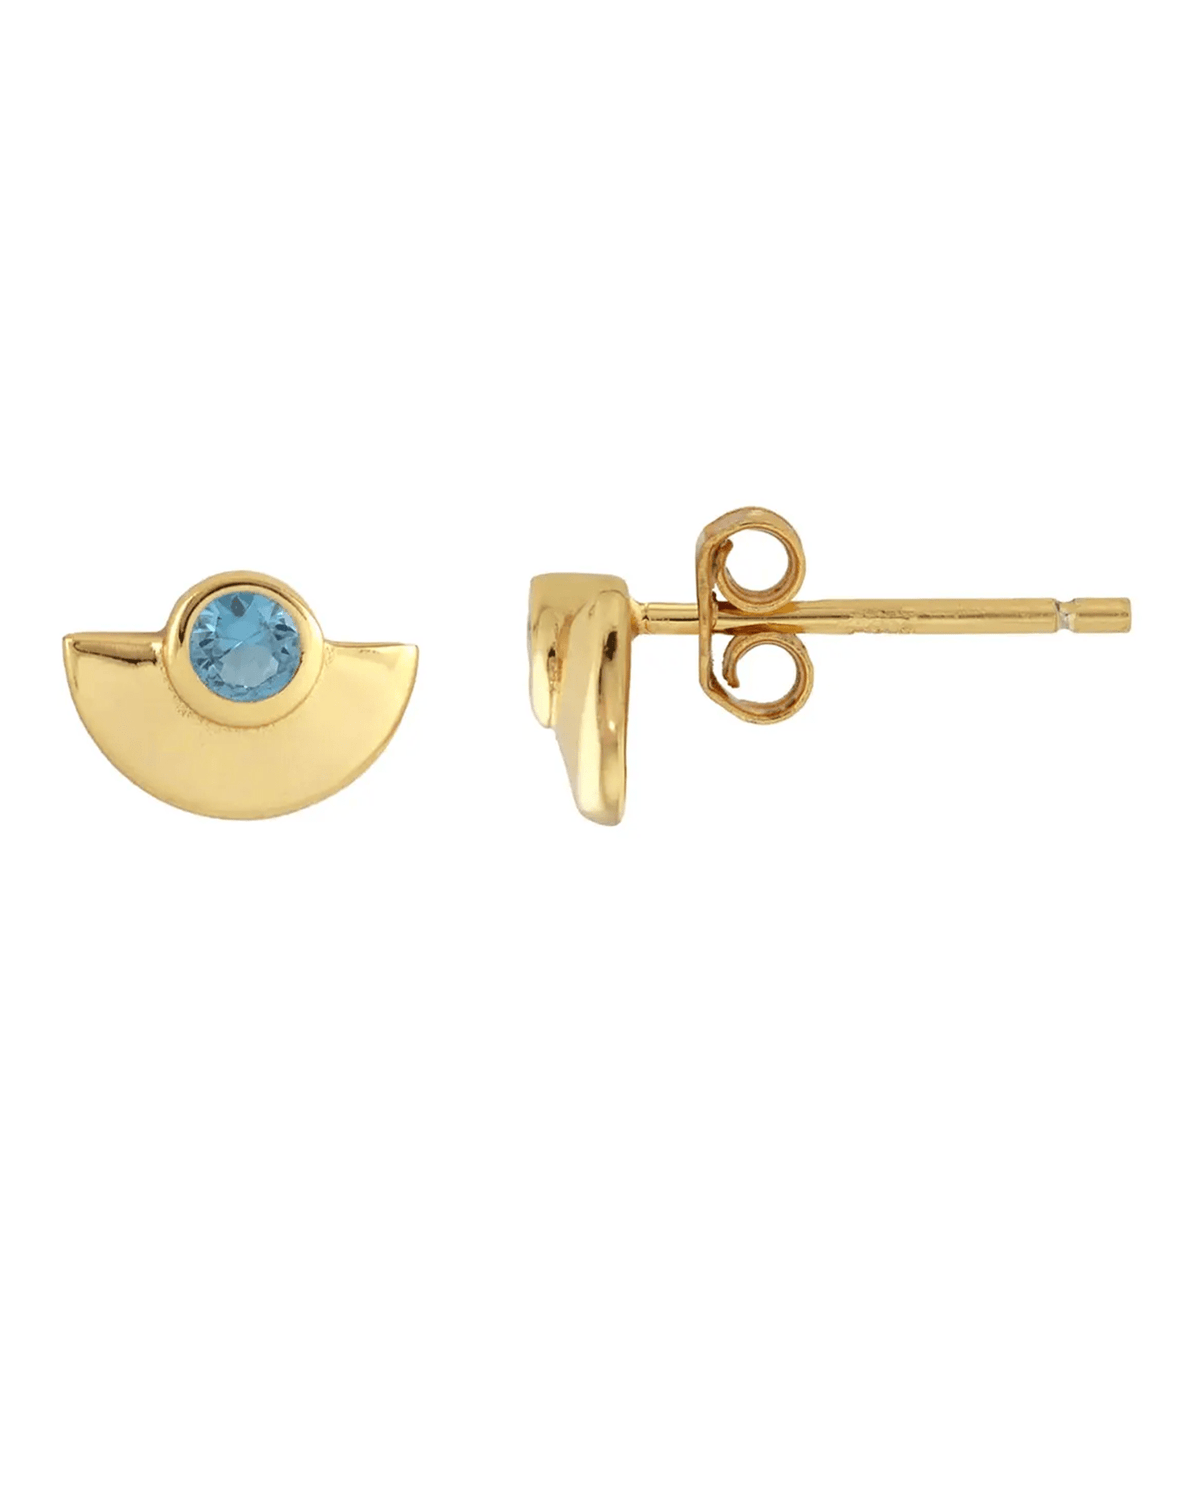 Kris Nations Jewelry 18K Gold Vermeil Half Moon Crystal 18K Gold Stud Earrings in Blue Topaz